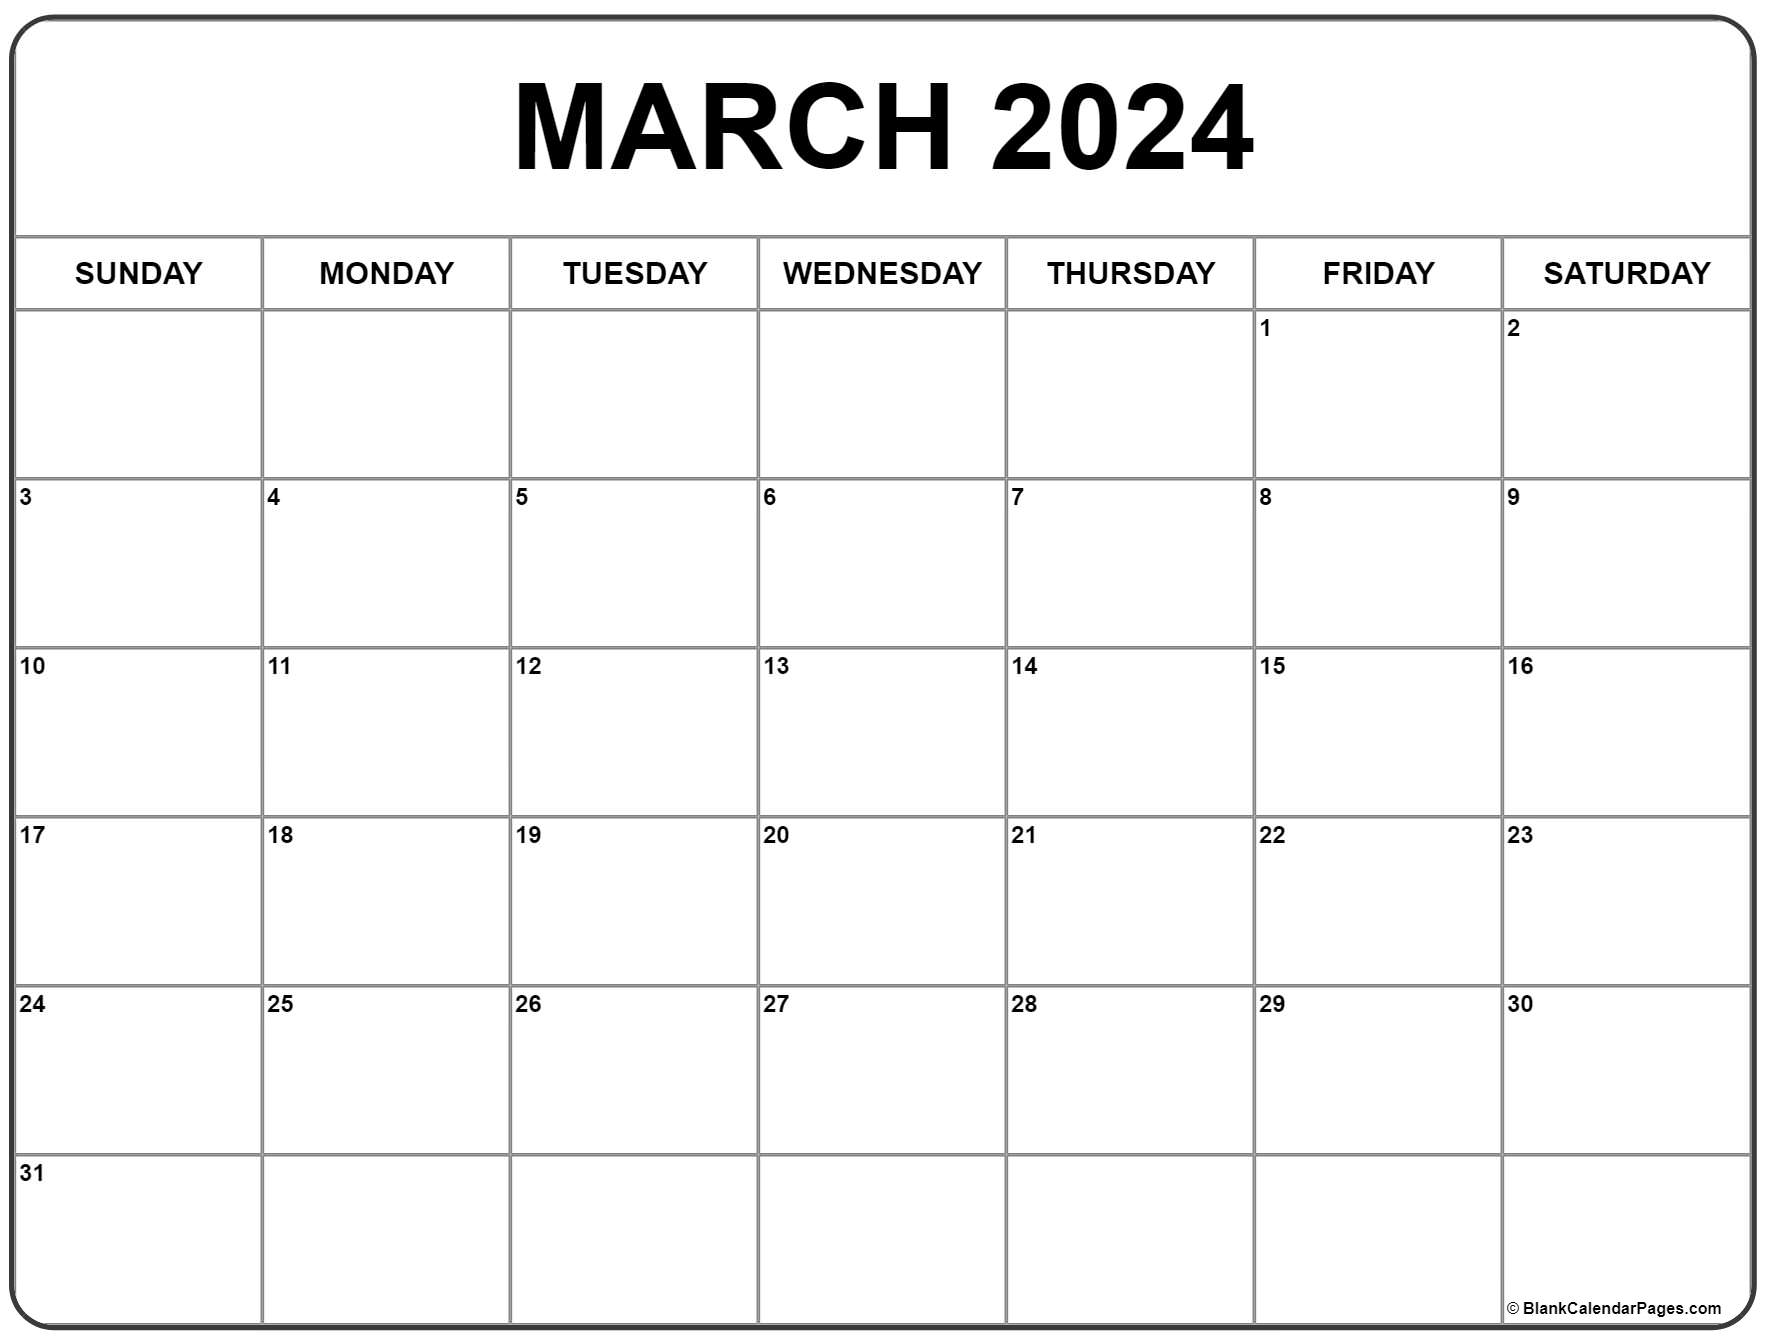 March 2024 Calendar | Free Printable Calendar for Free Printable Calendar For March 2024